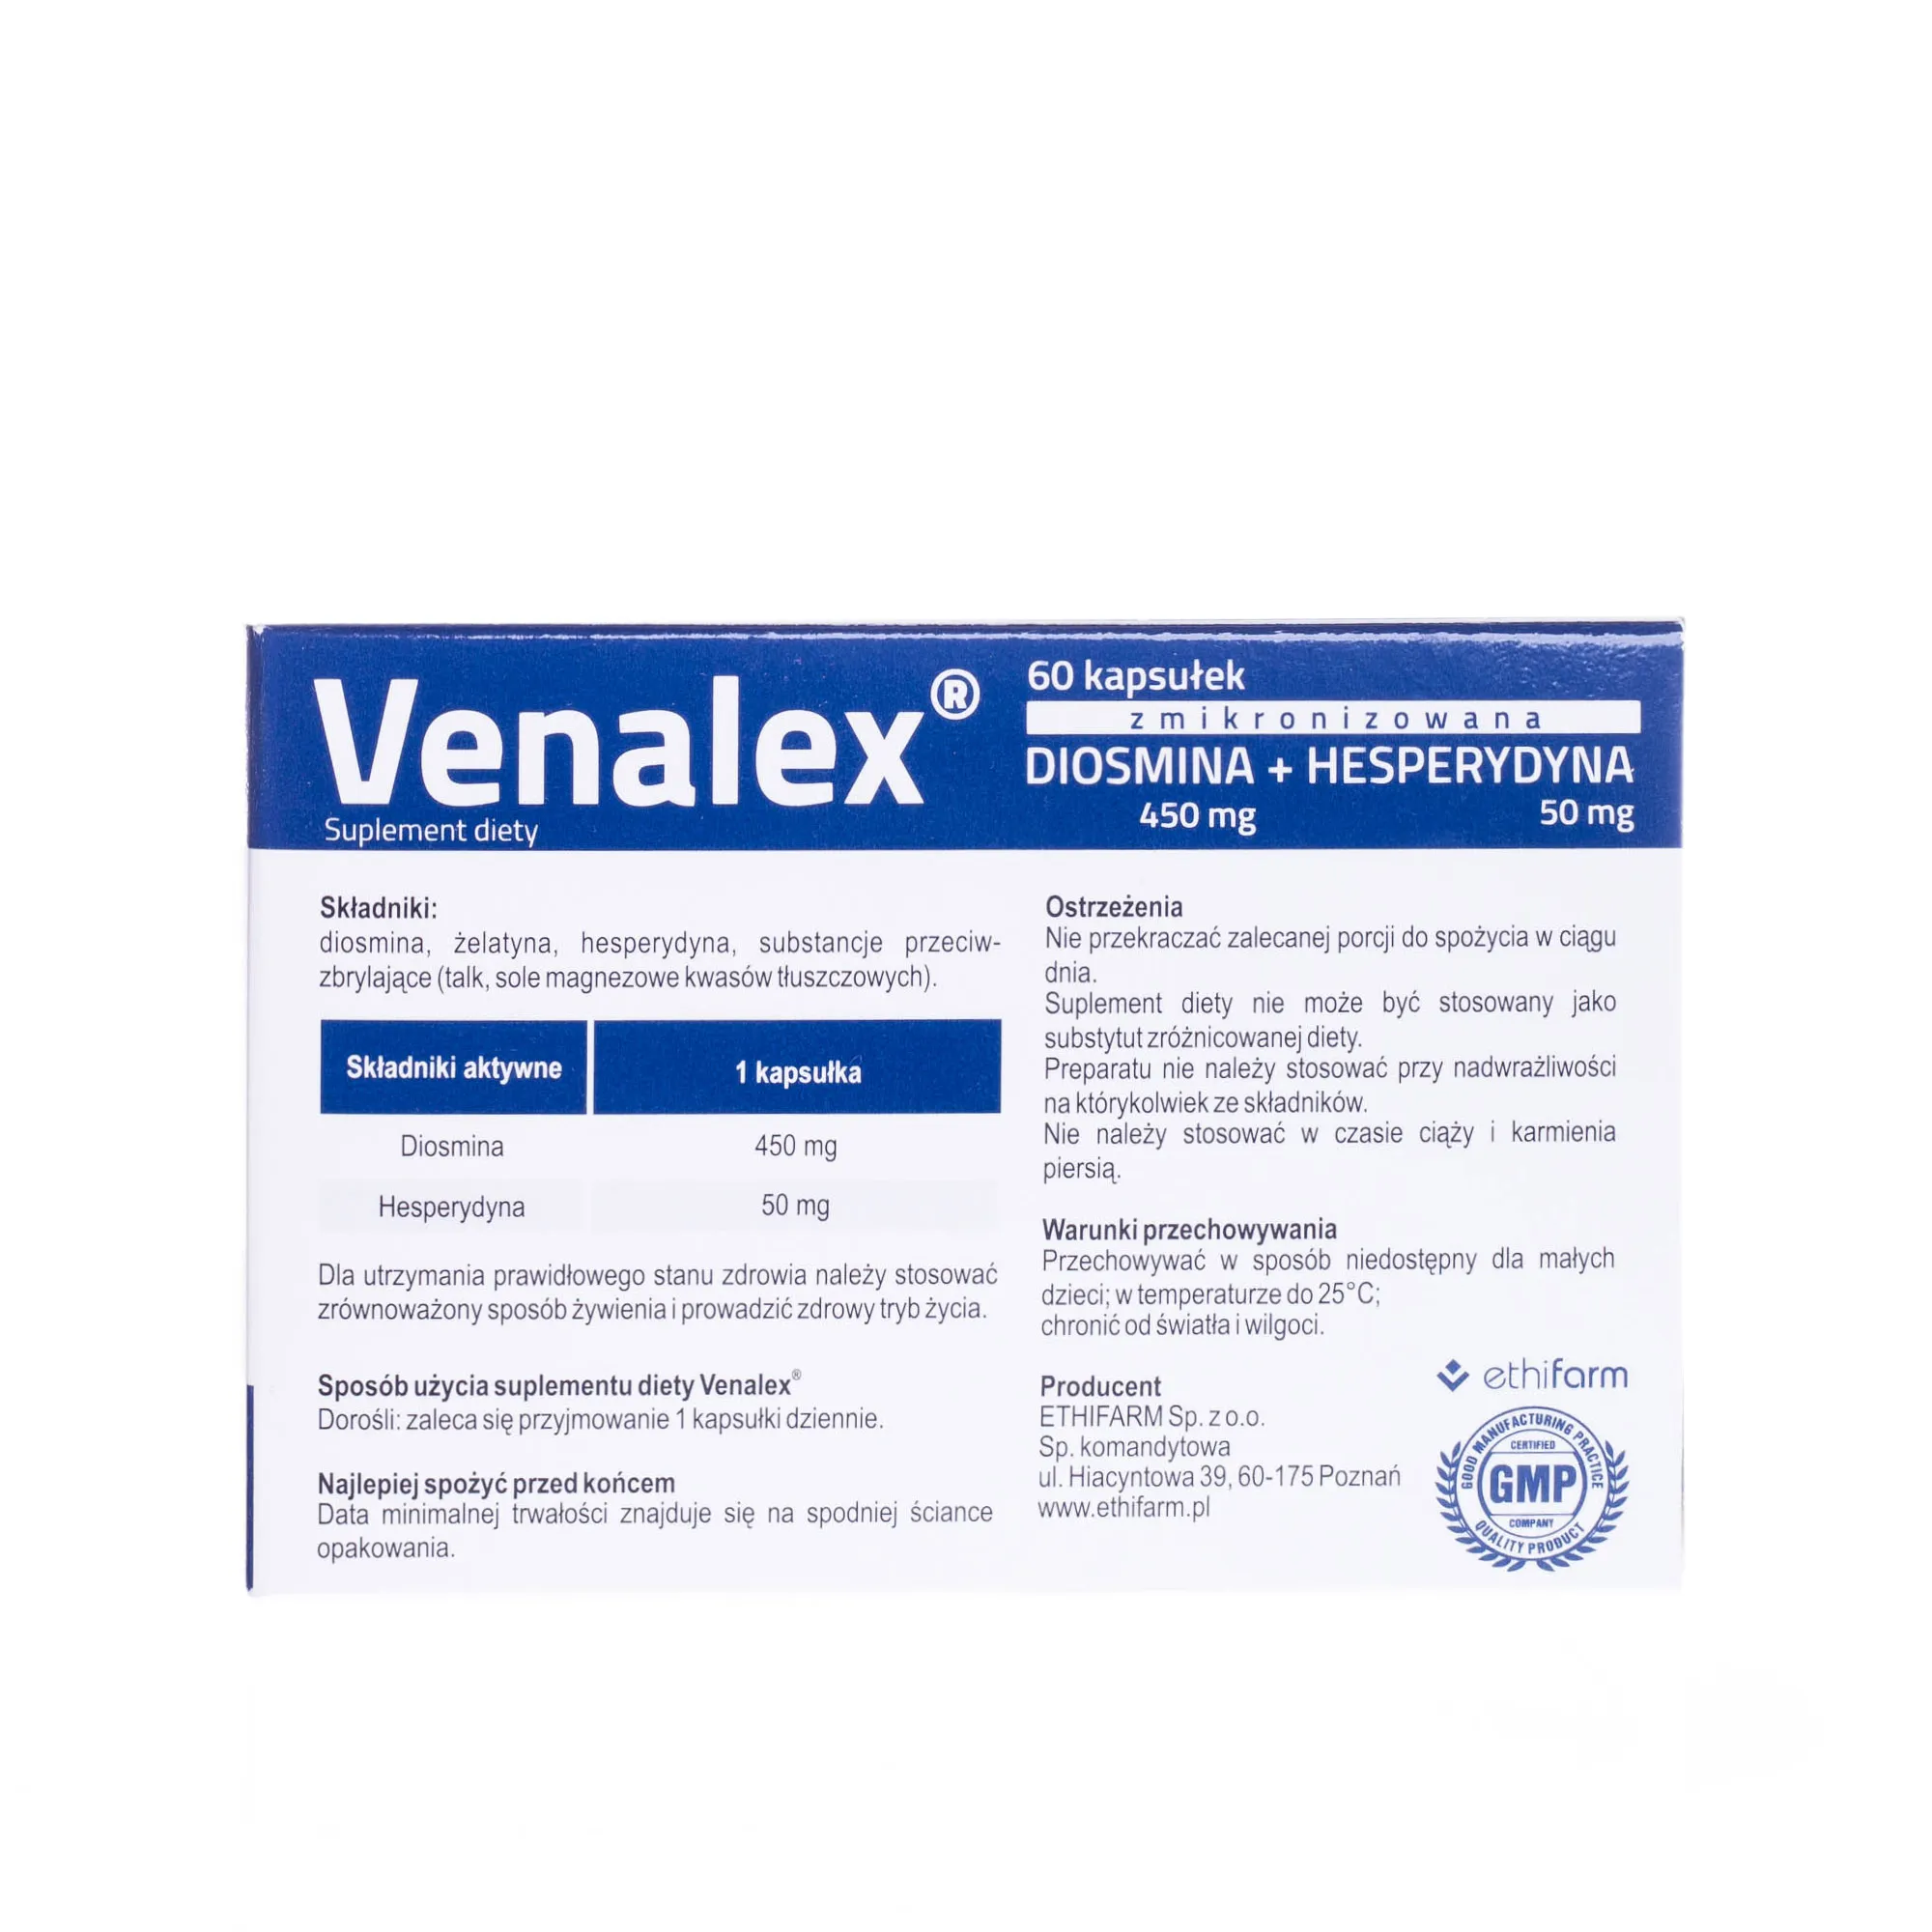 Venalex ( zmikronizowana diosmina 450 mg + Hespedryna 50 mg ), suplement diety, 60 kapsułek 